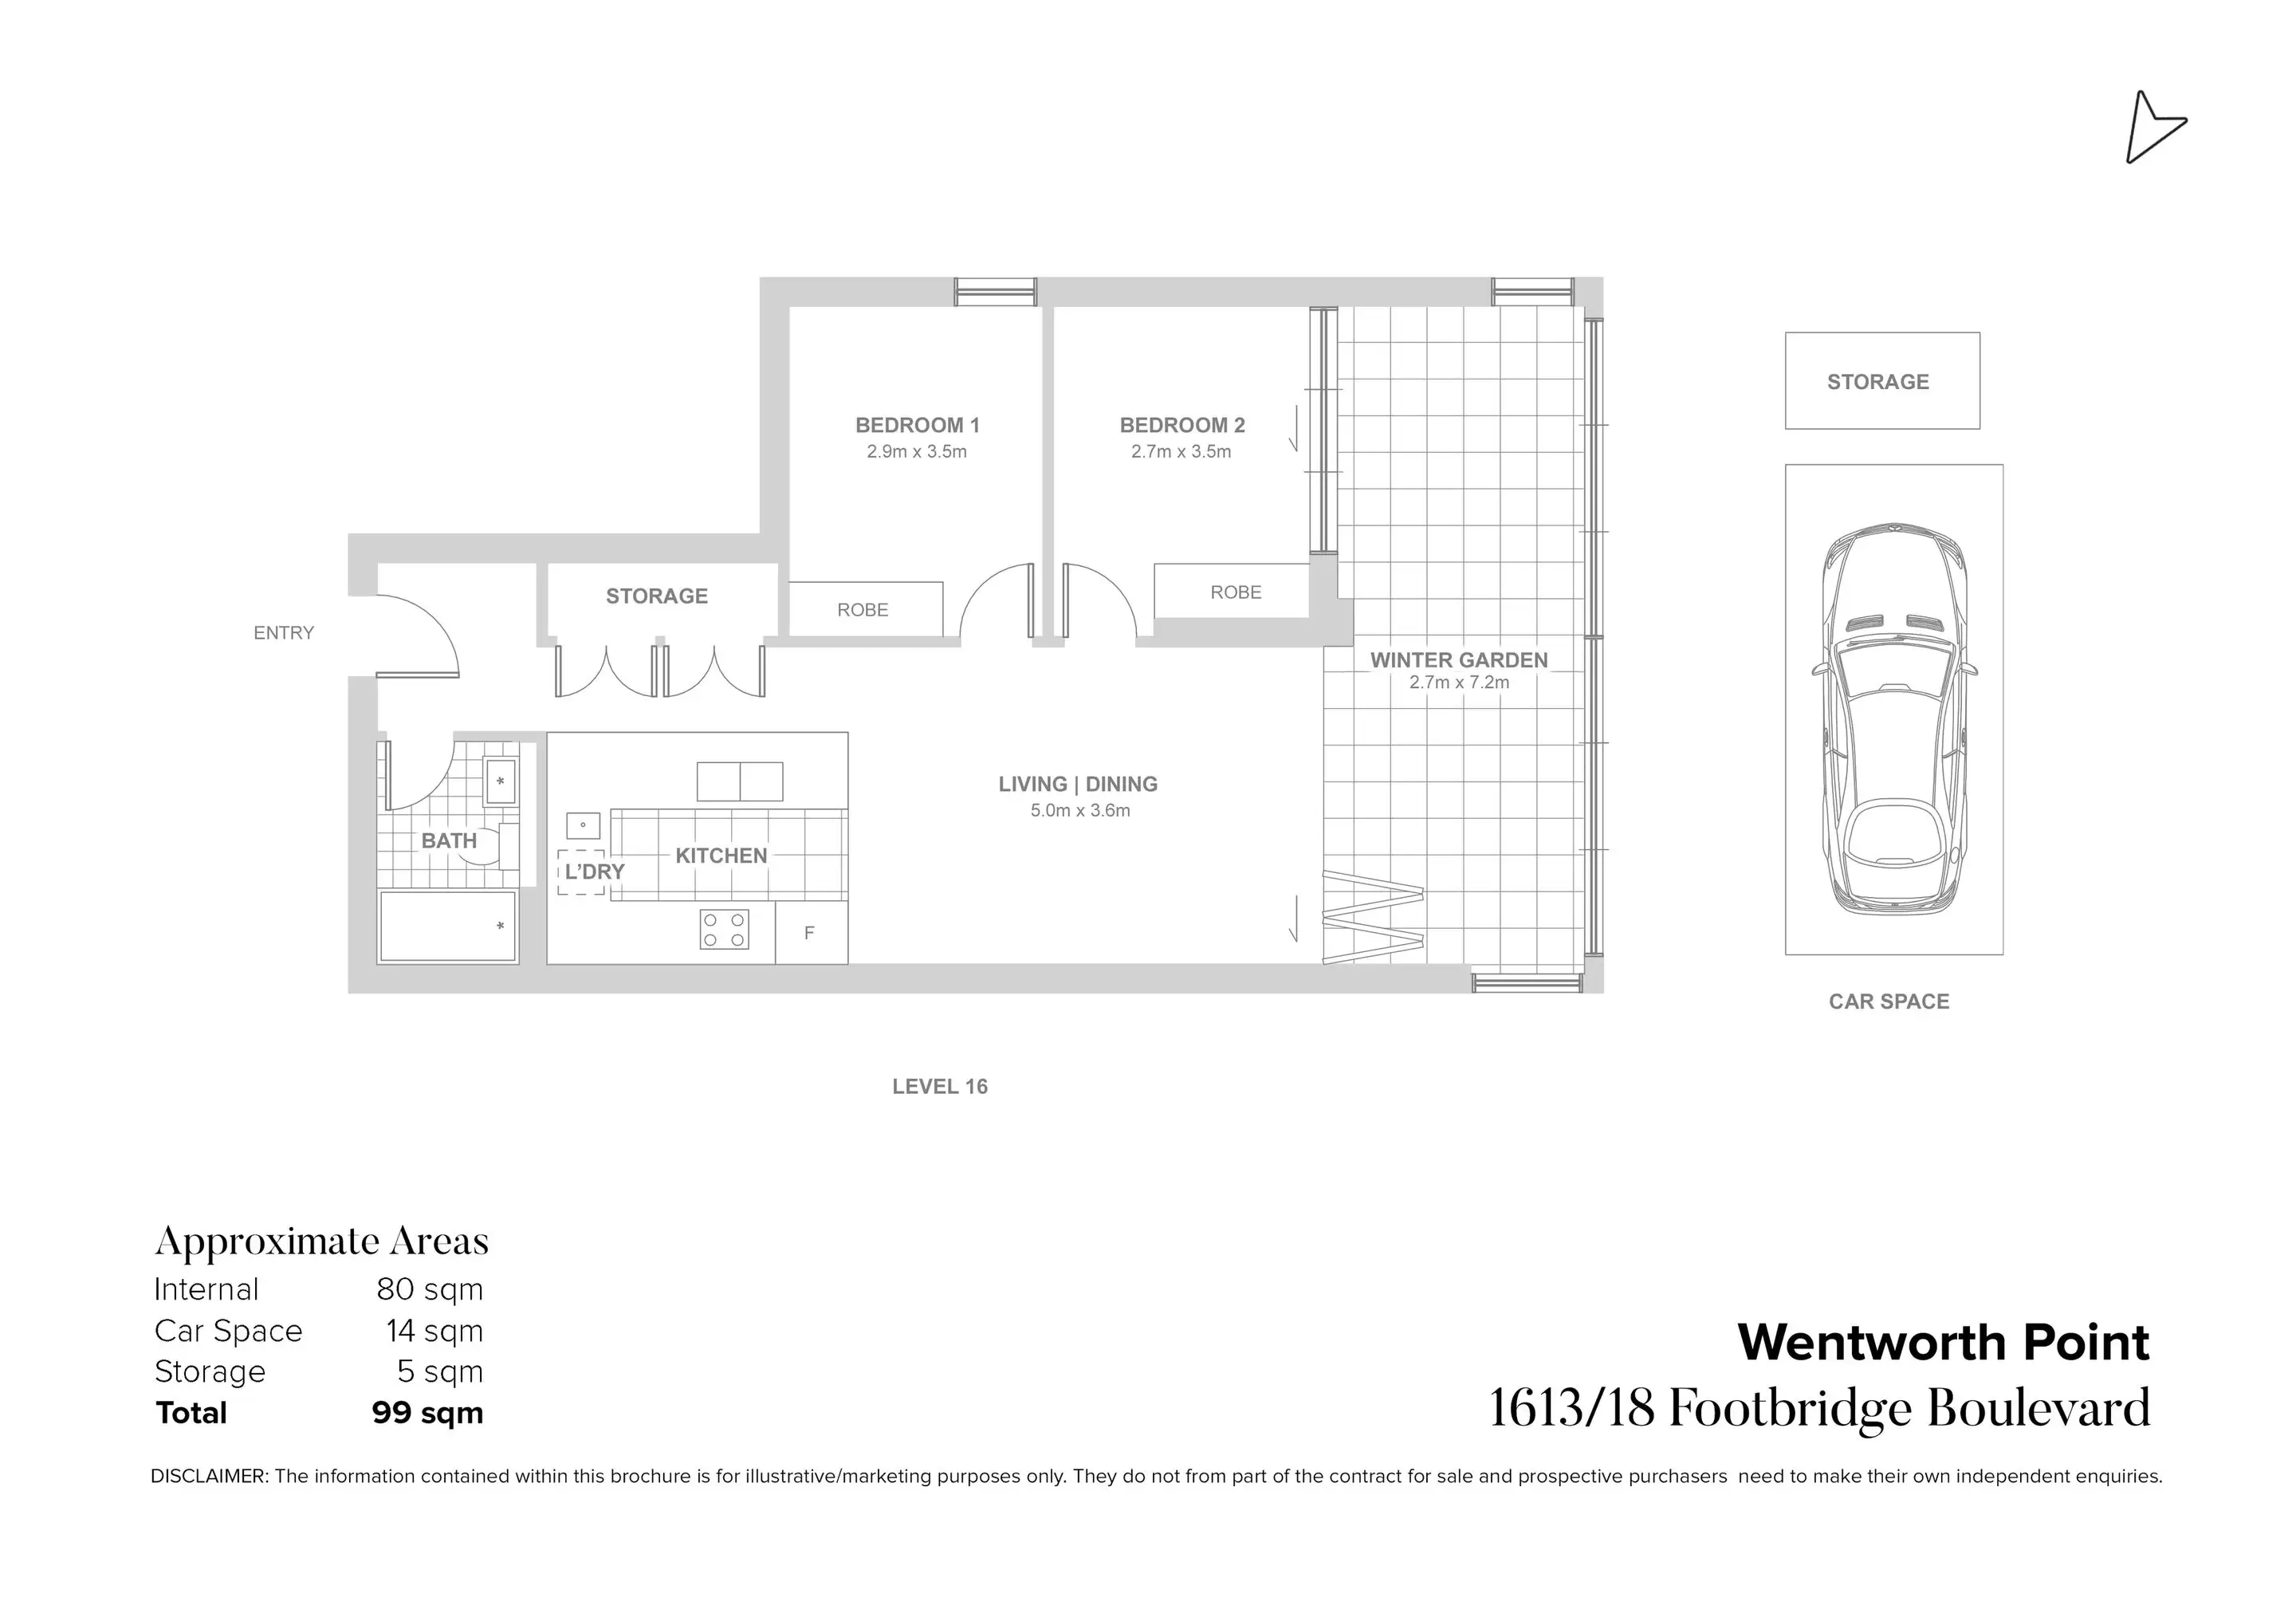 1613/18 Footbridge Boulevard, Wentworth Point Sold by Chidiac Realty - floorplan